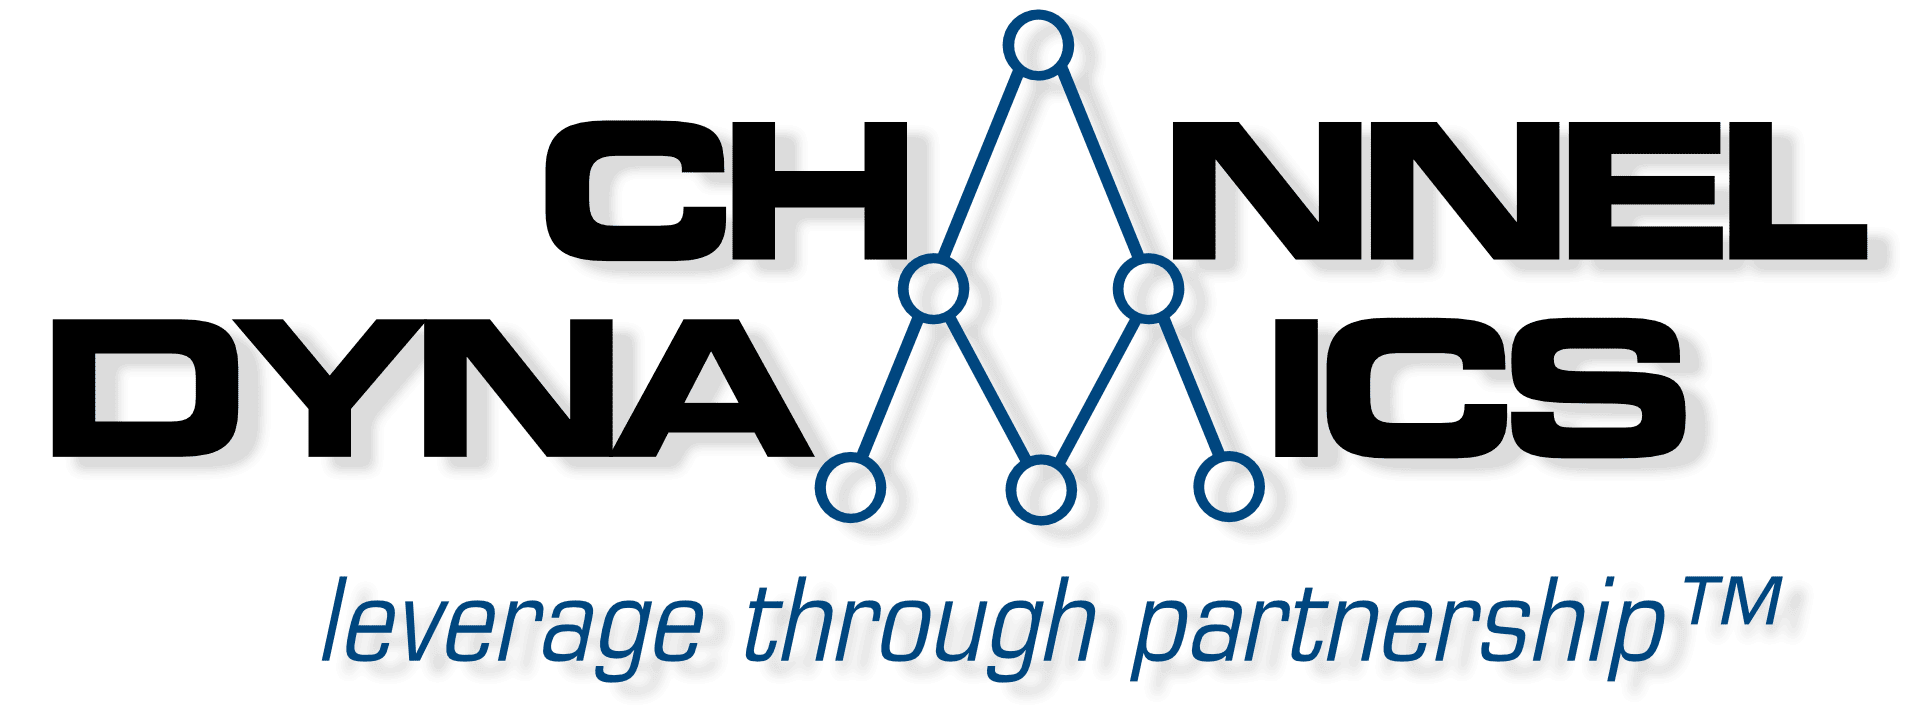 Channel Dynamics - Leverage Through Partnership